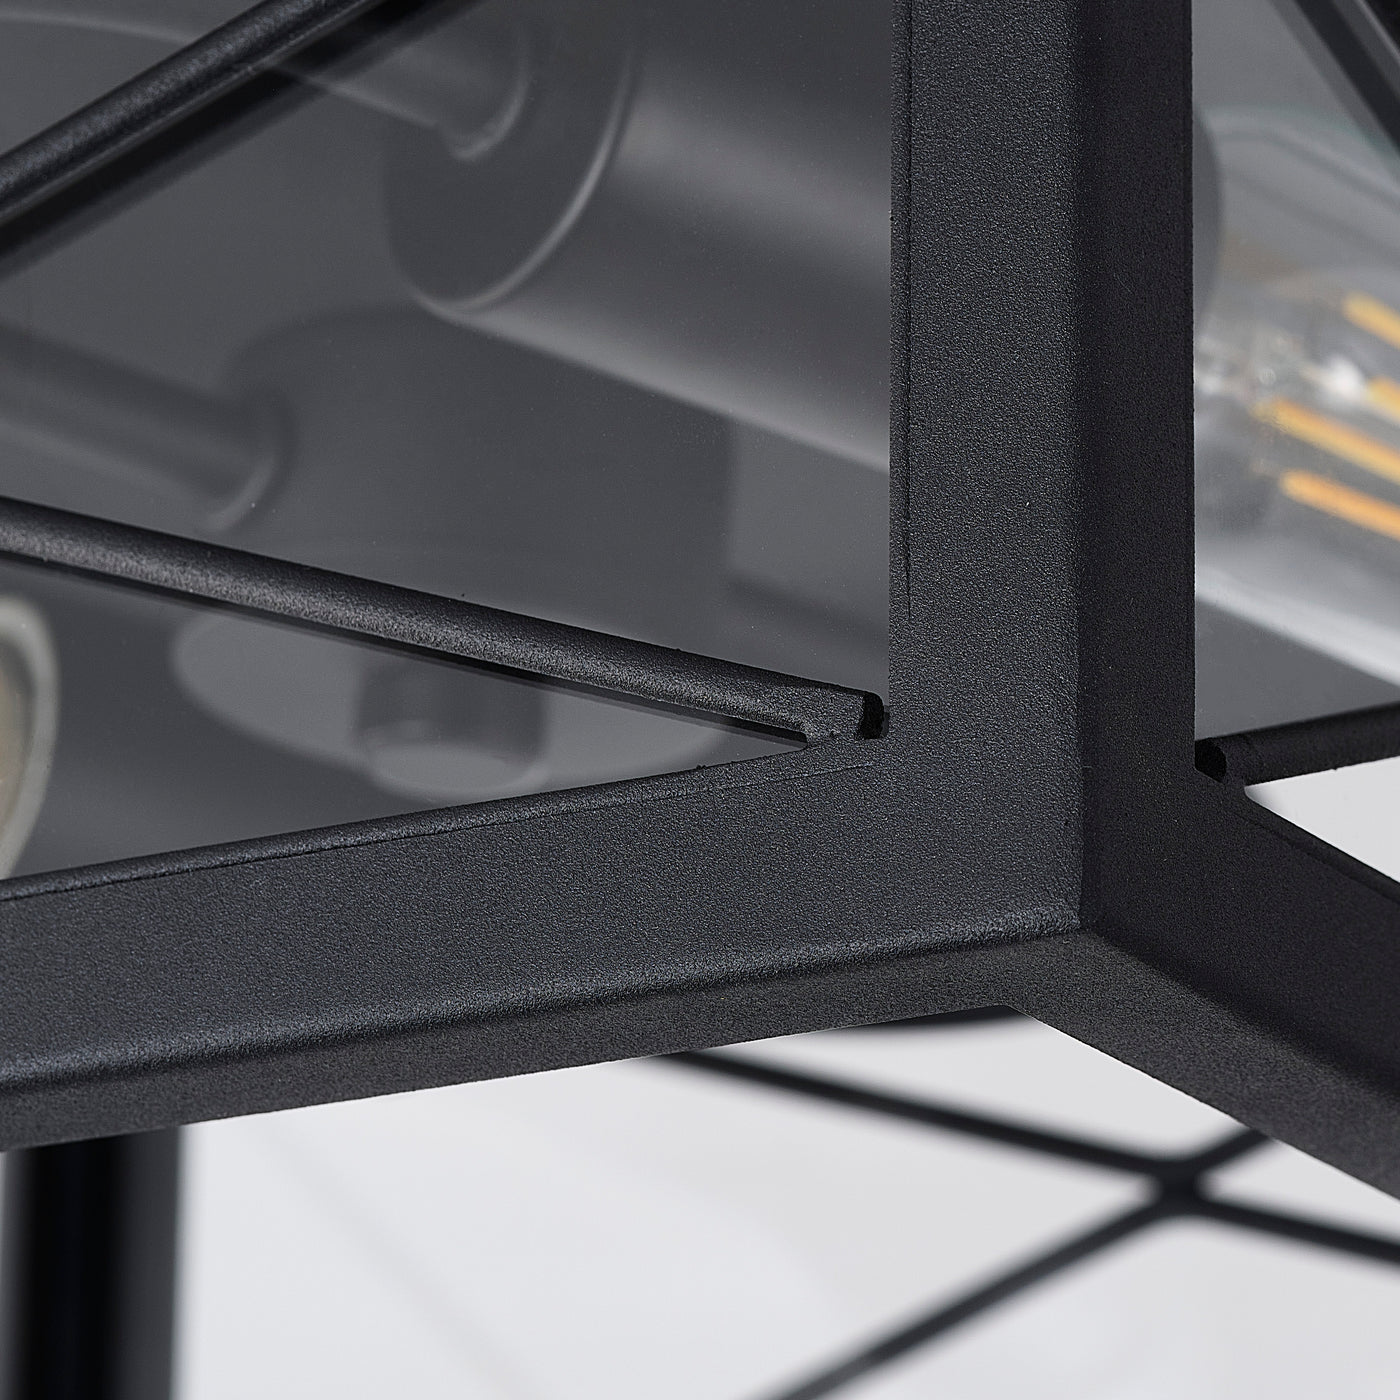 2-Lights Sqaure Design Glass Shade Flush Mount Lighting